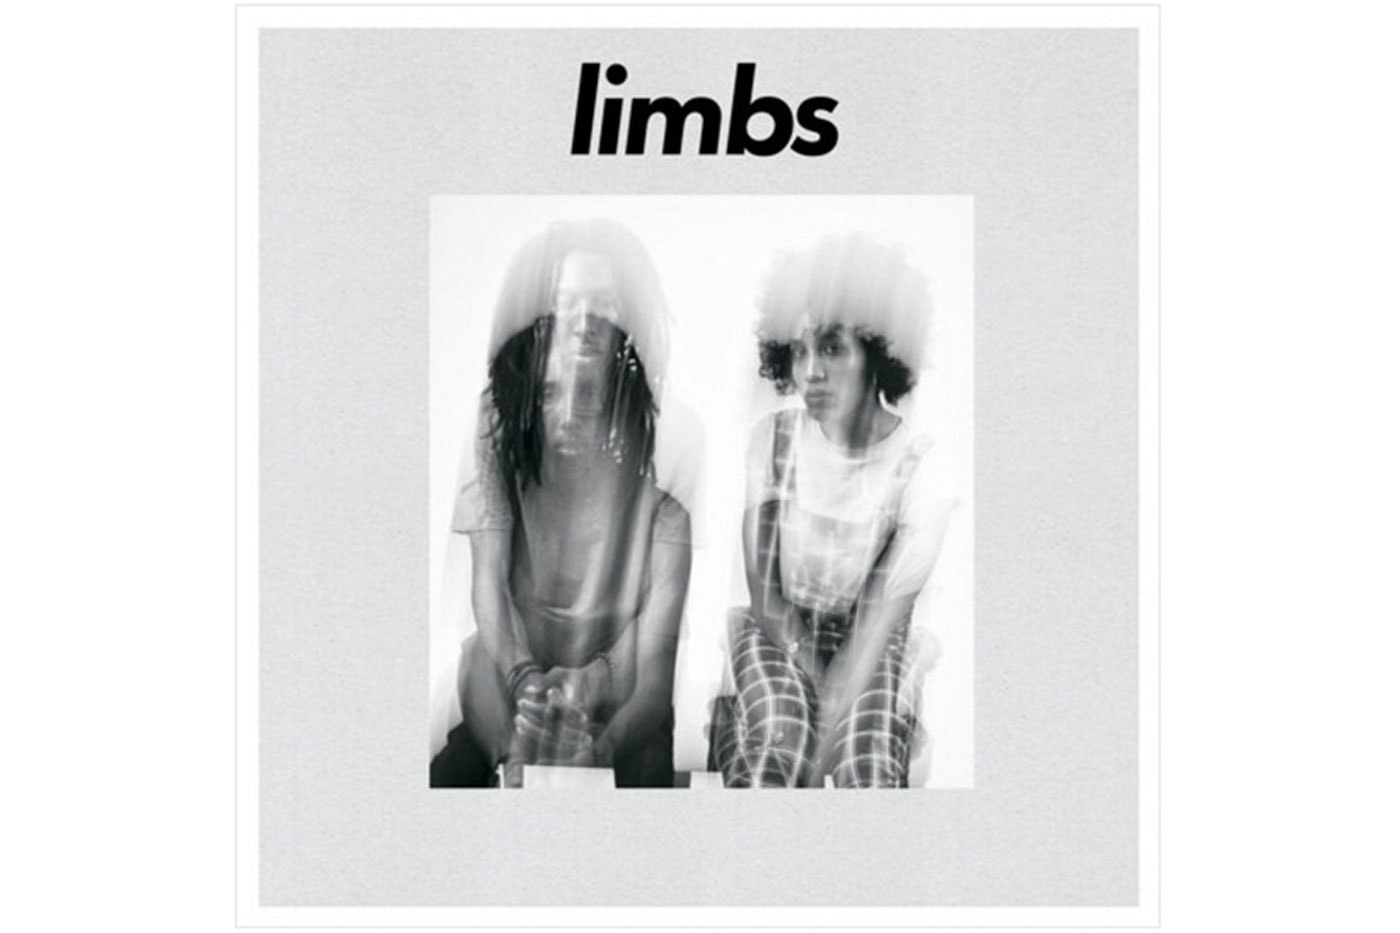 LIMBS